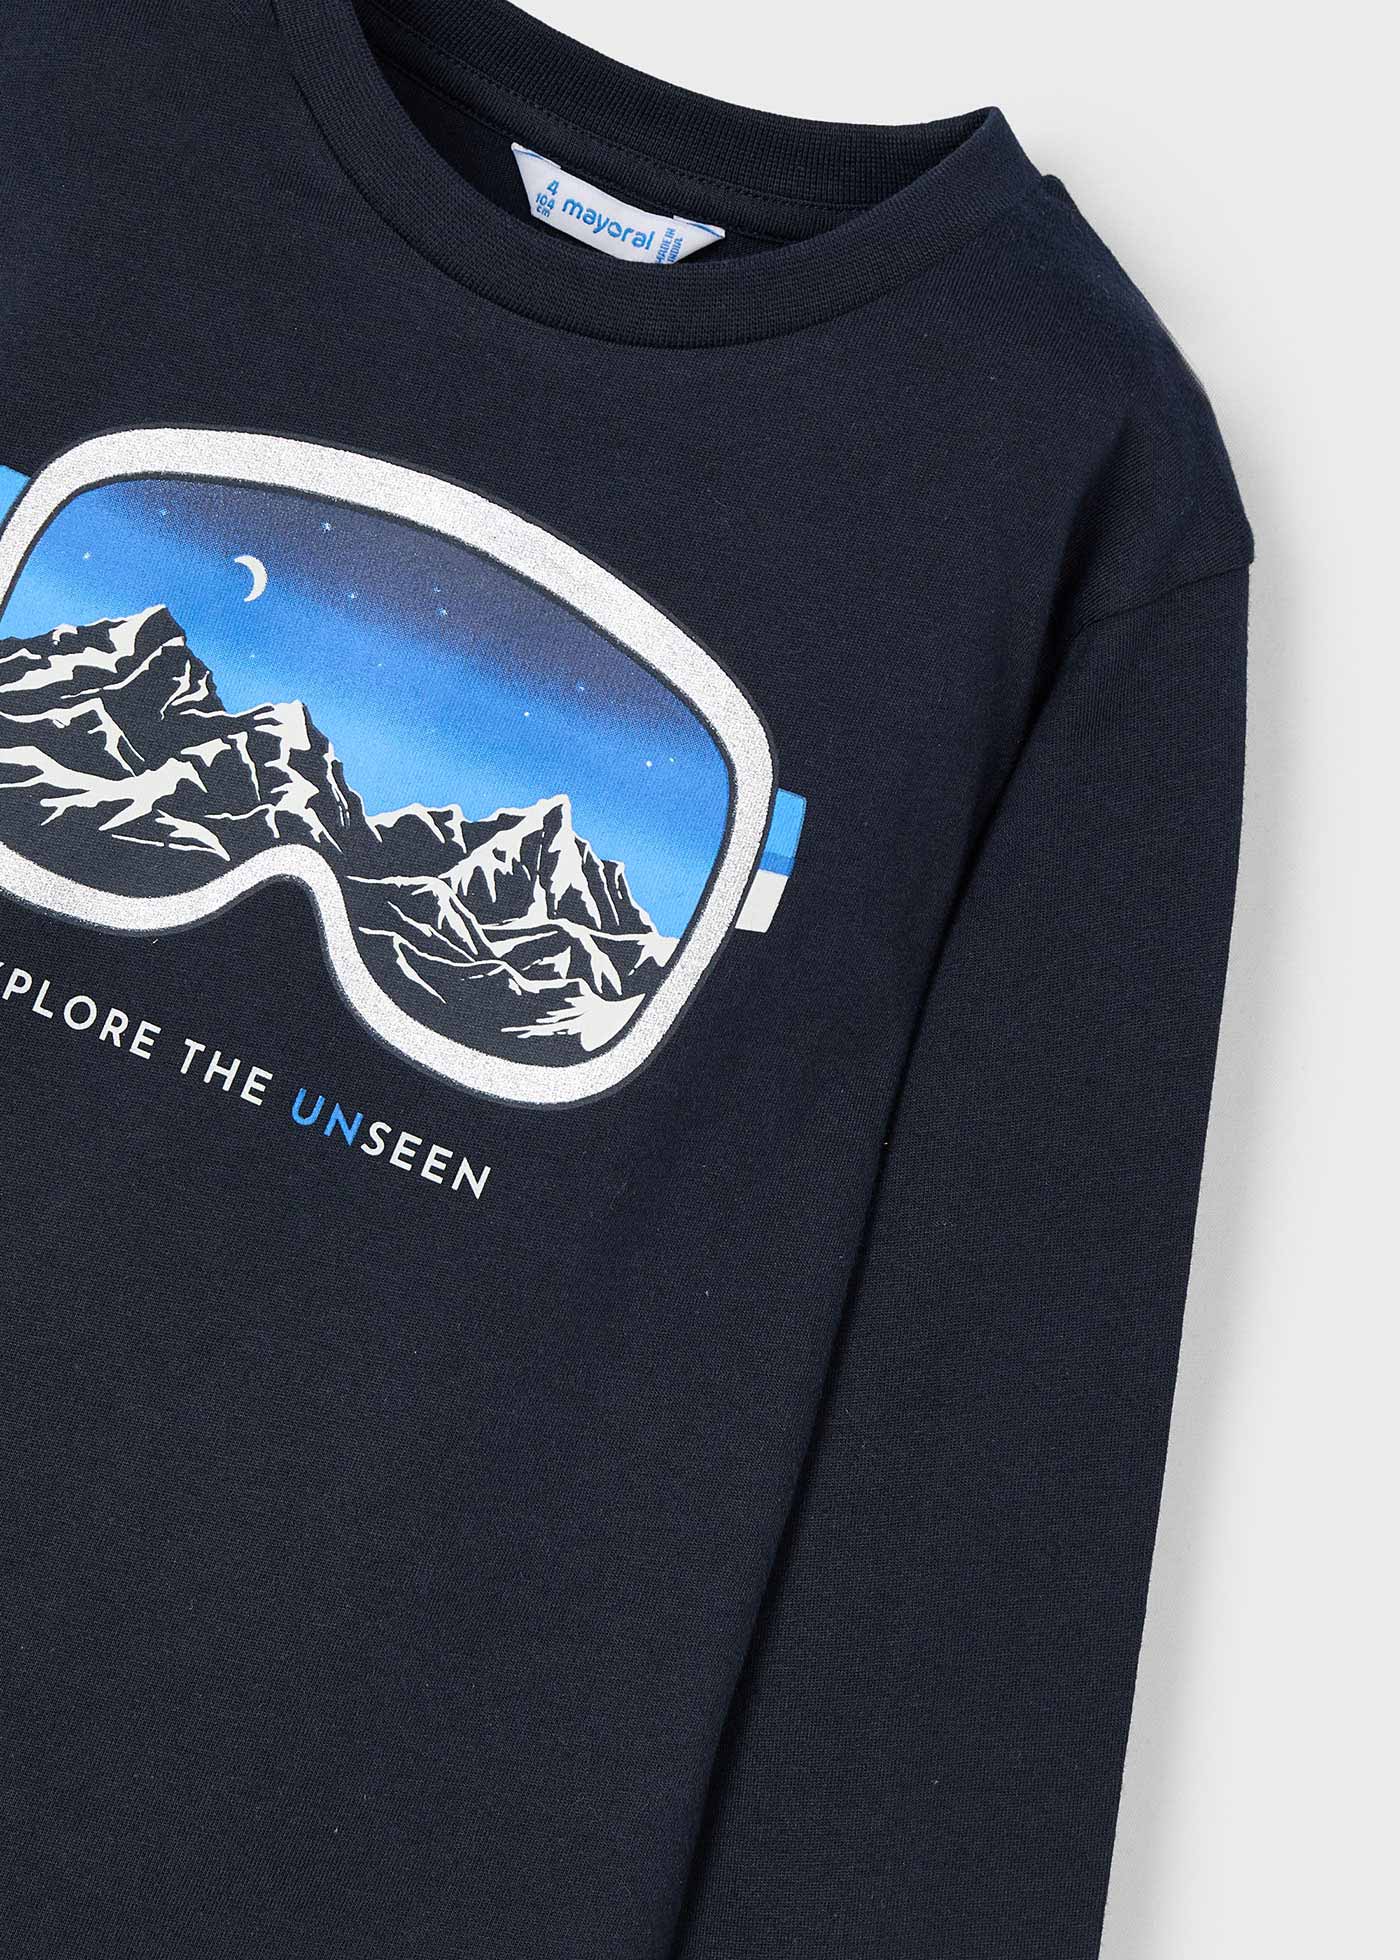 T-shirt ski goggles for boys